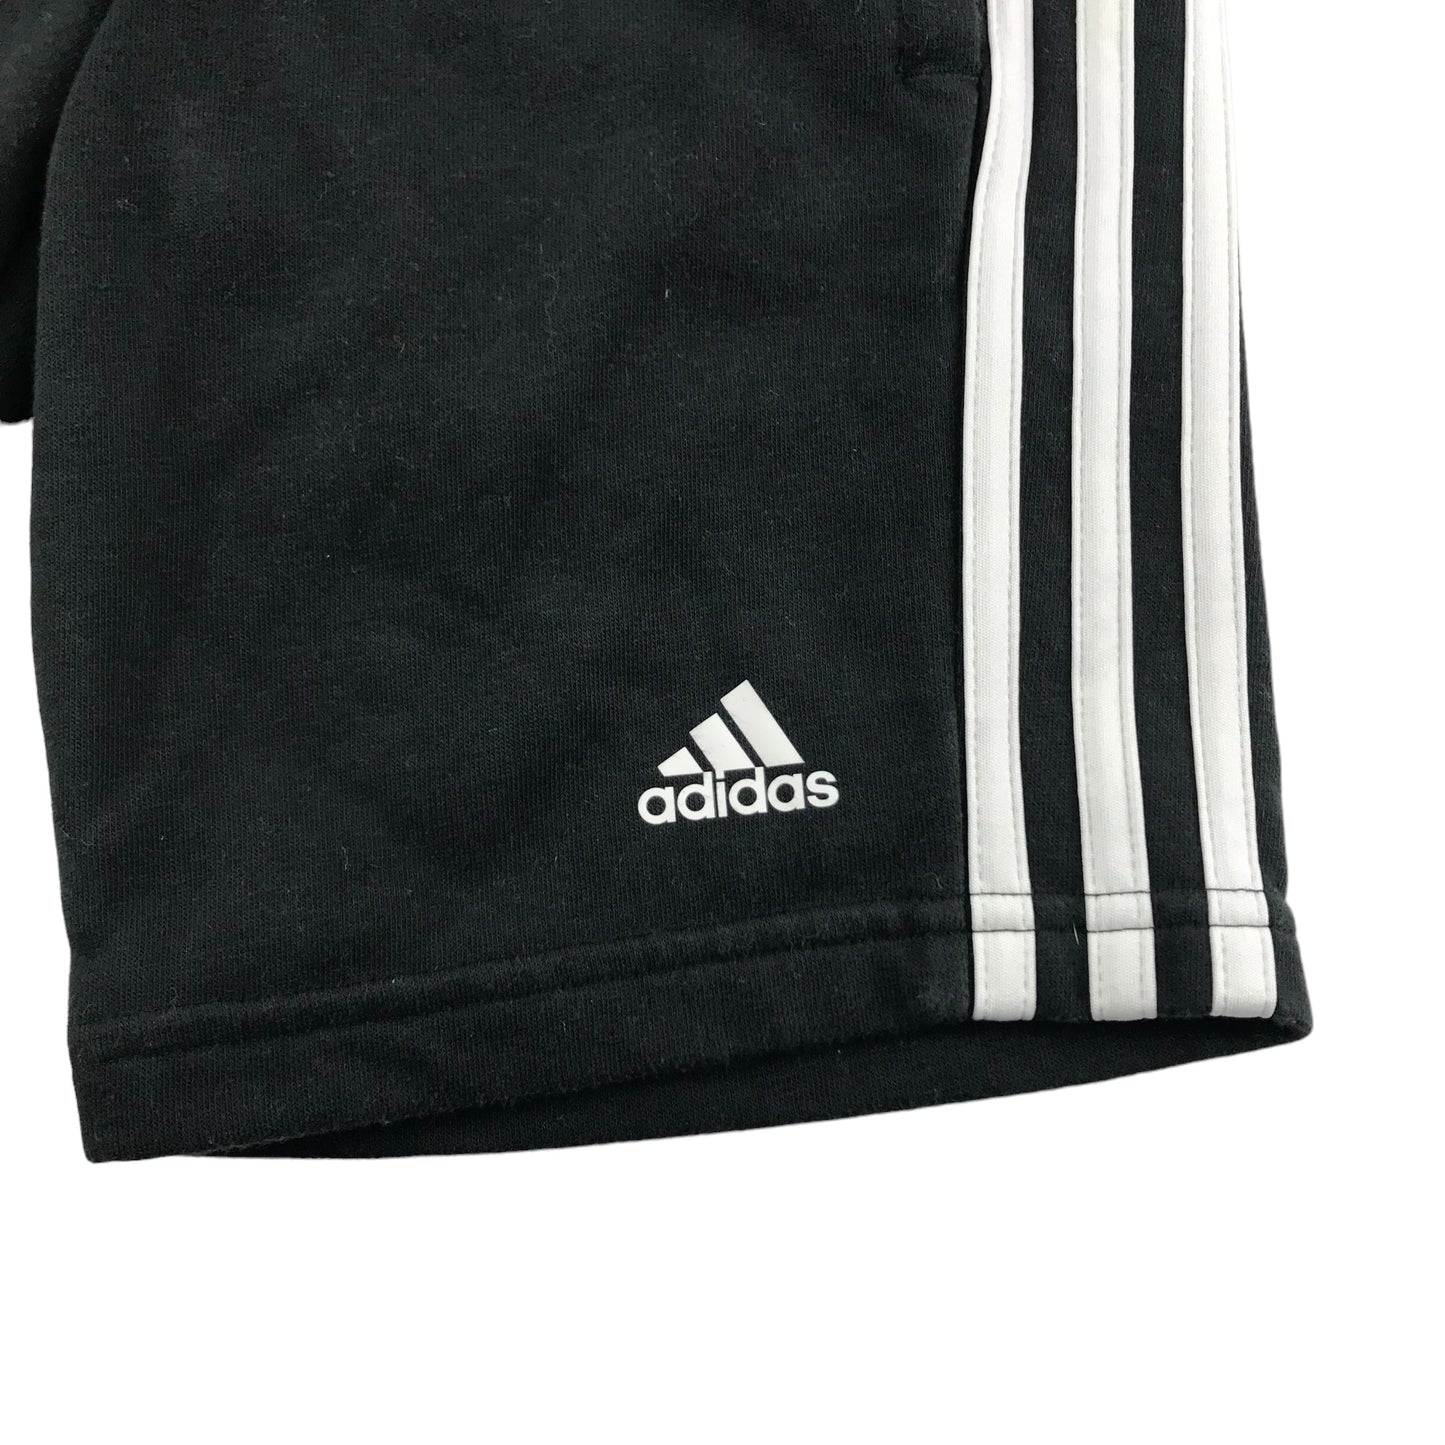 Adidas Shorts Age 6 Black Jersey with Three Stripes Design